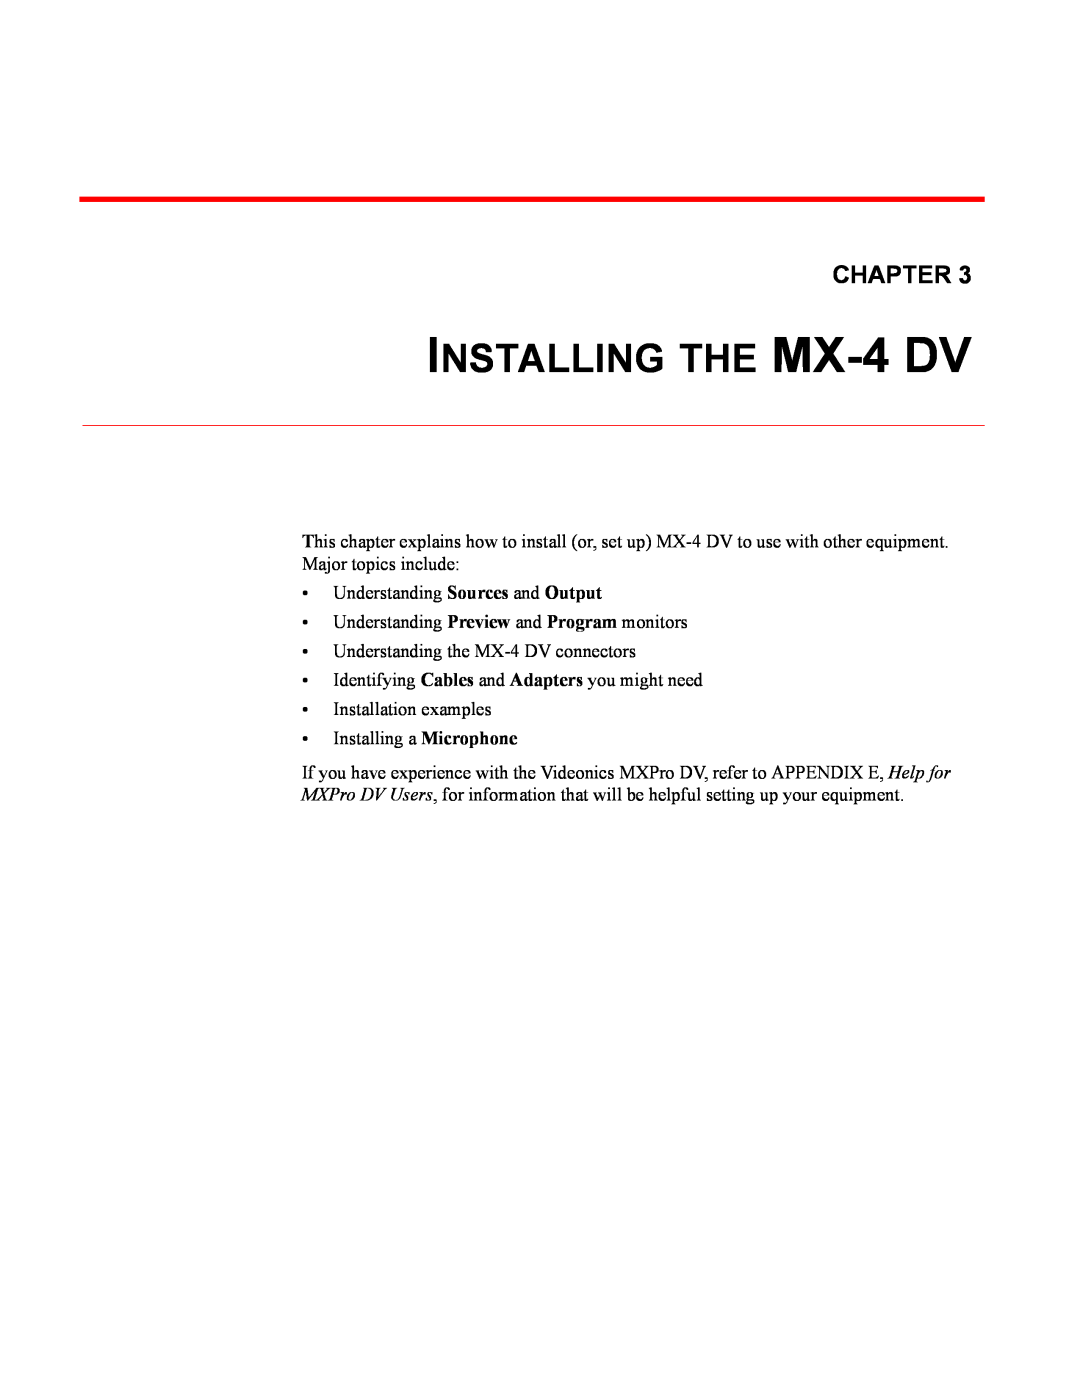 FOCUS Enhancements MX-4DV manual INSTALLING THE MX-4 DV, Chapter 